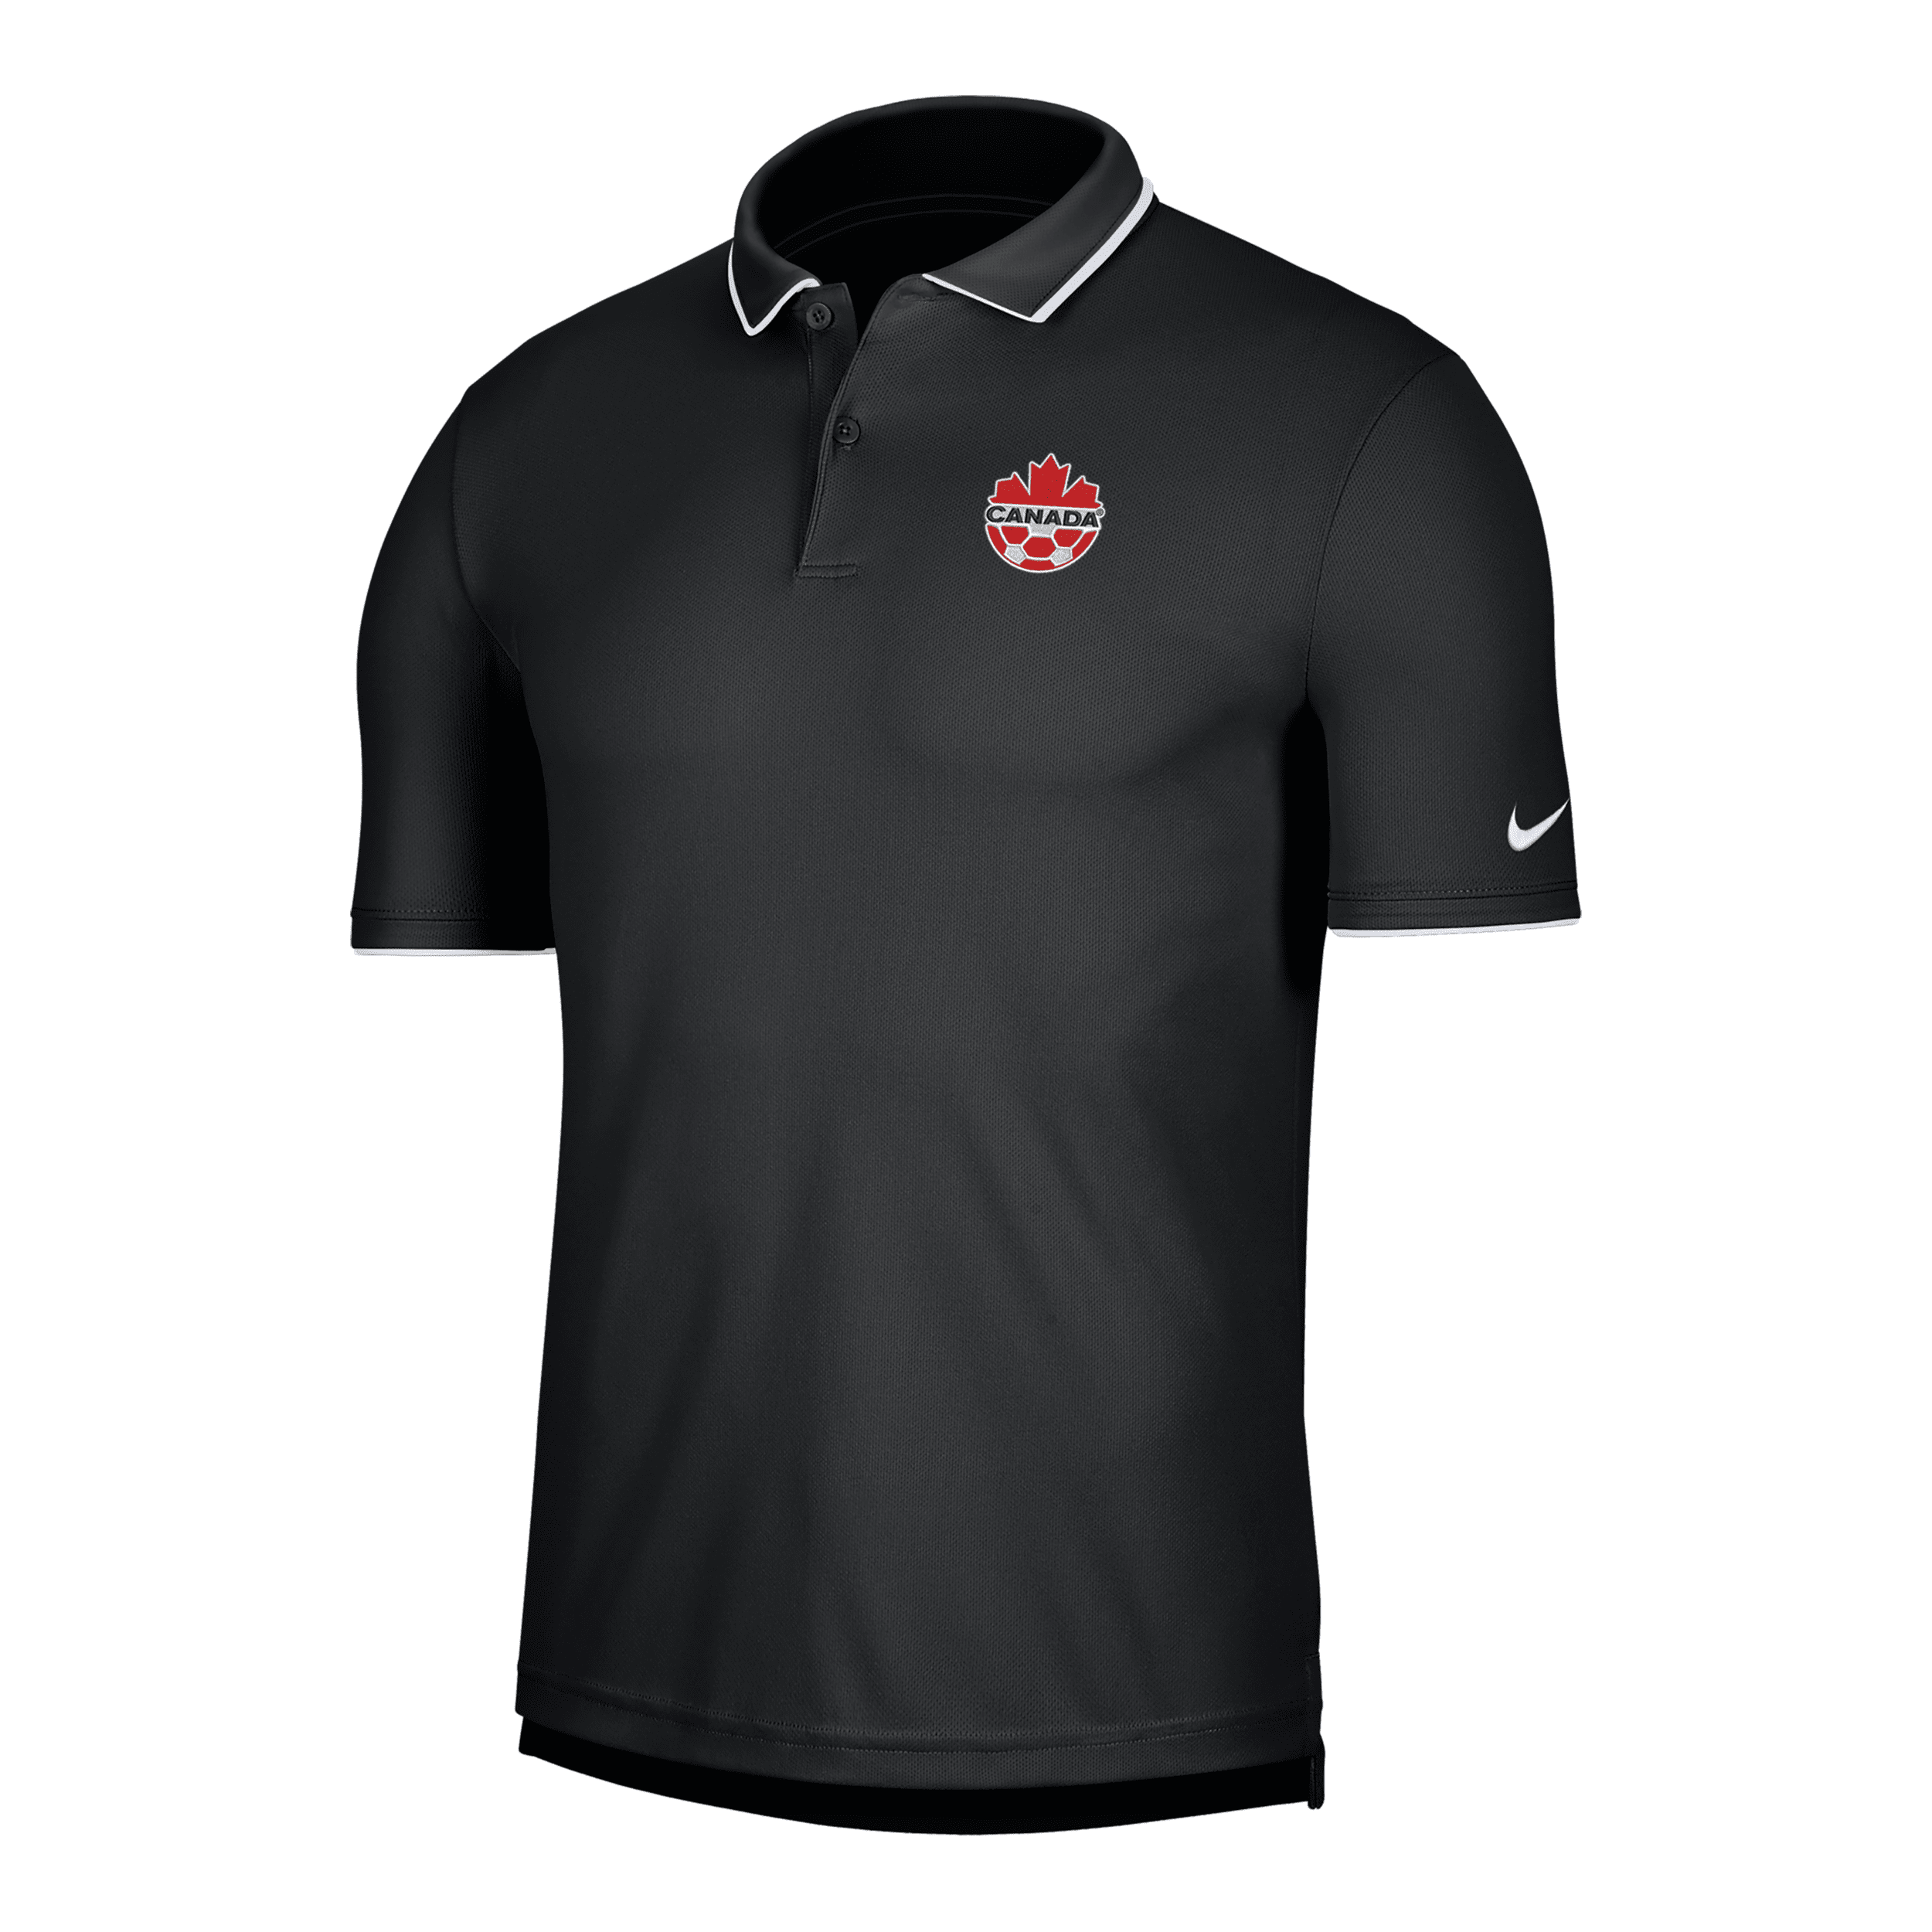 Nike Canada  Men's Dri-fit Collegiate Soccer Polo In Black